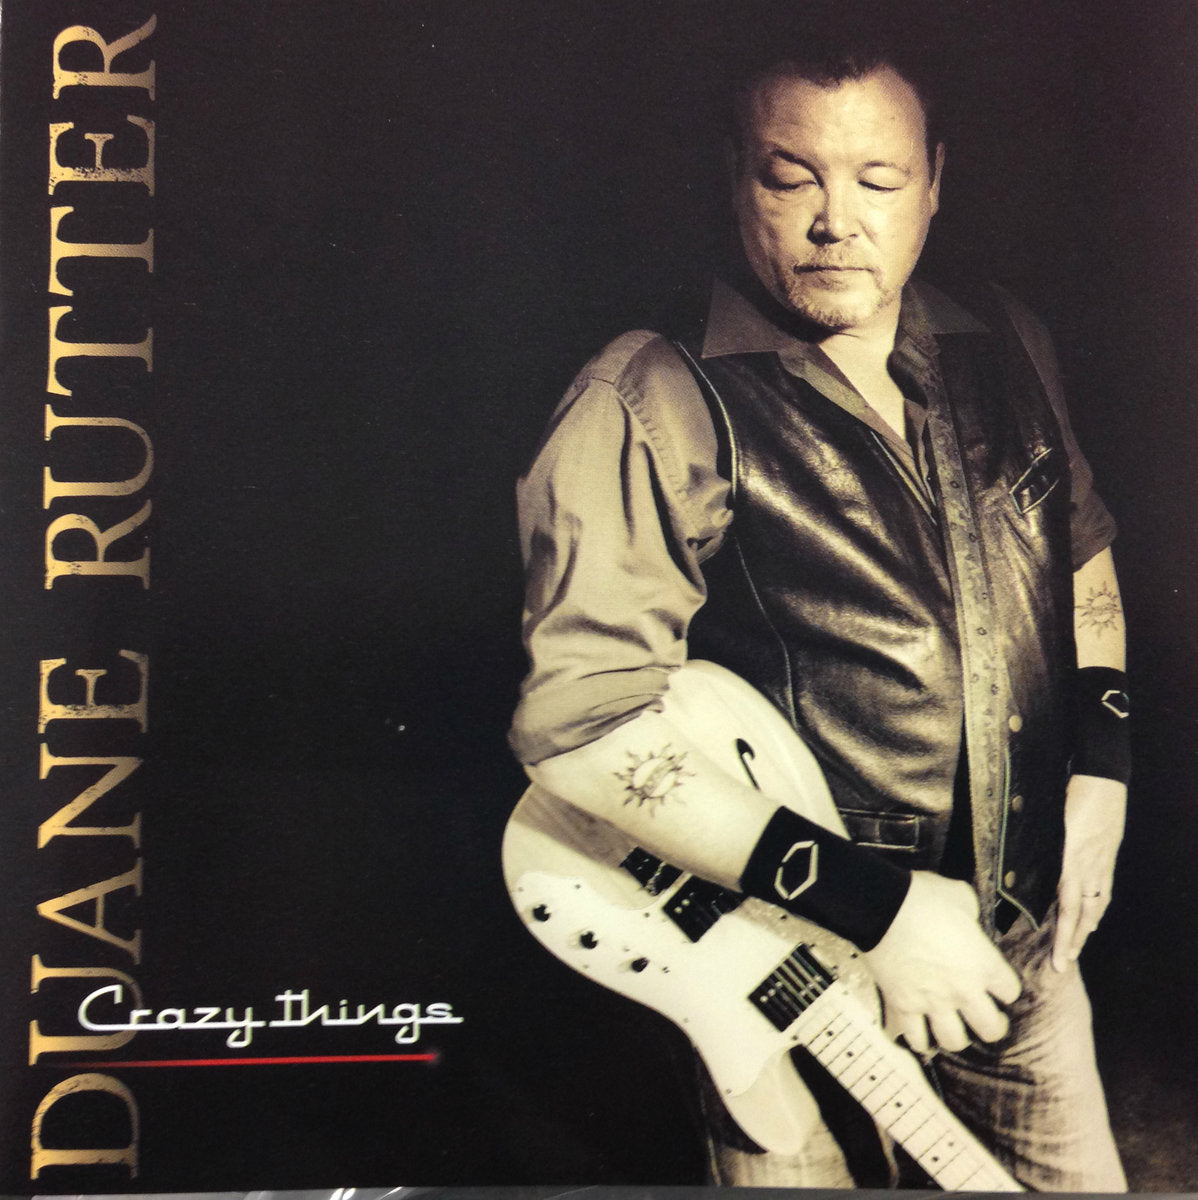 Duane Rutter - Crazy Things - CD